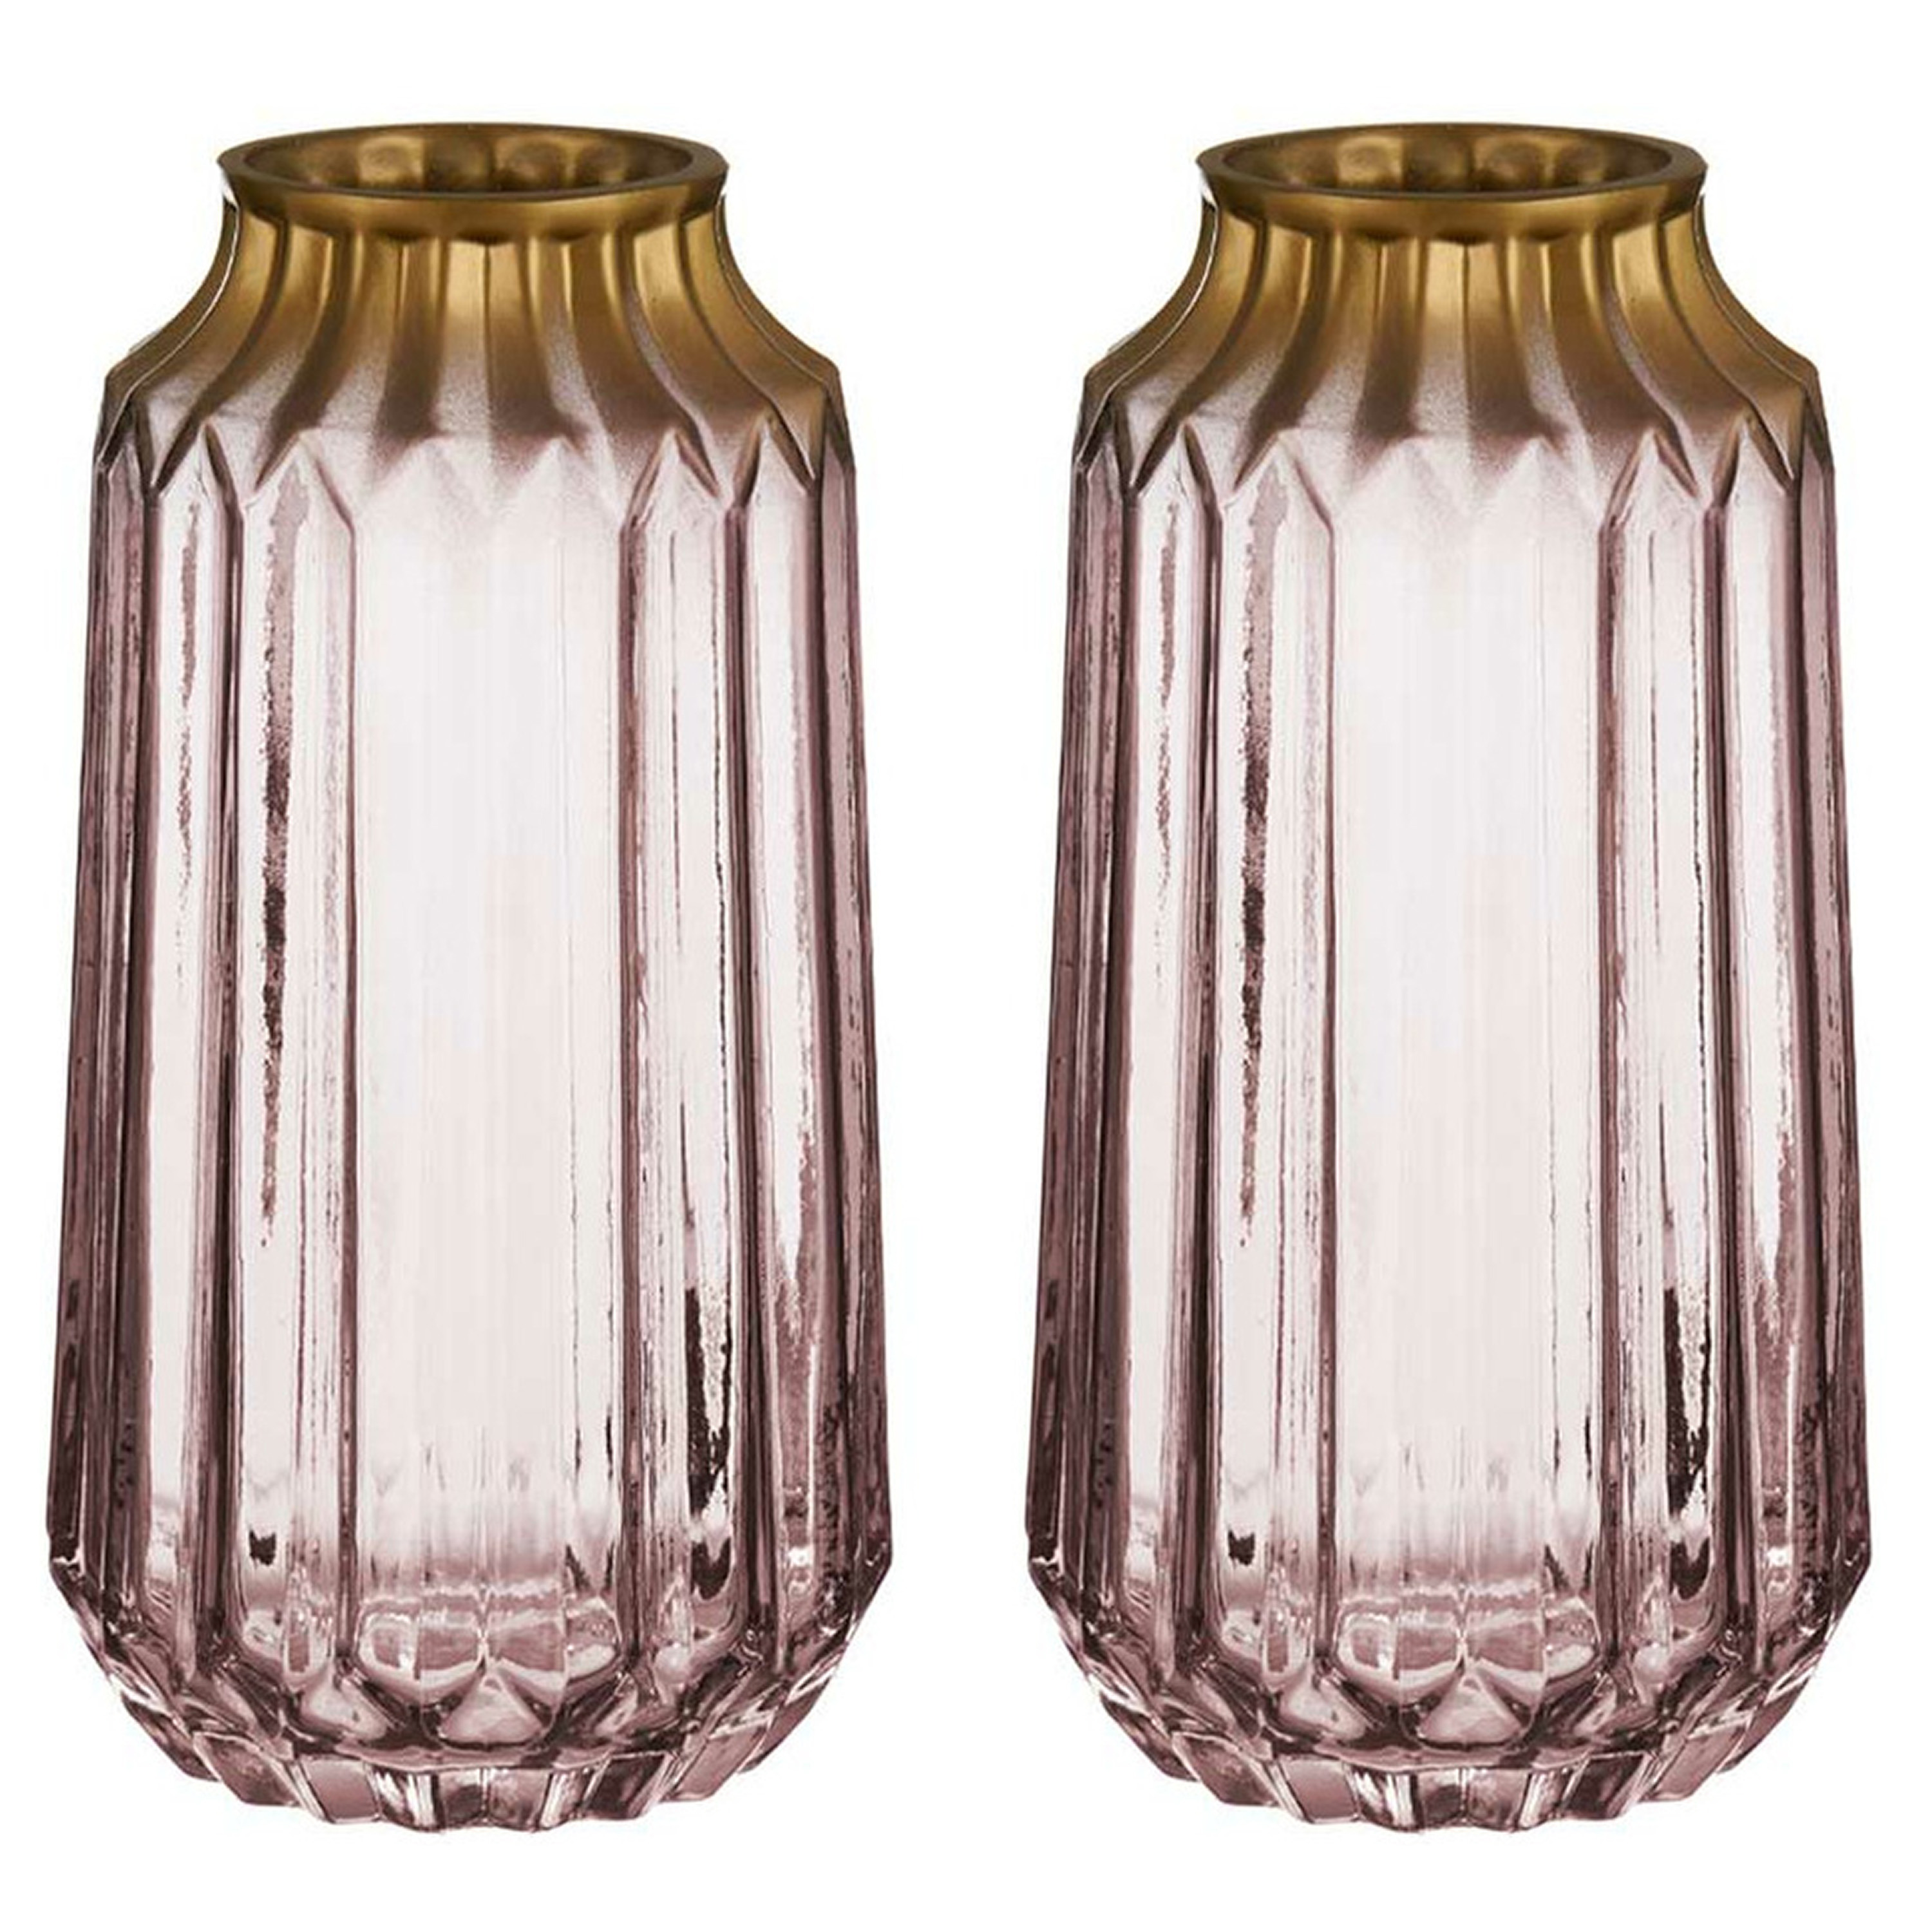 Giftdecor Bloemenvazen 2x stuks - luxe deco glas - roze transparant/goud - 13 x 23 cm -